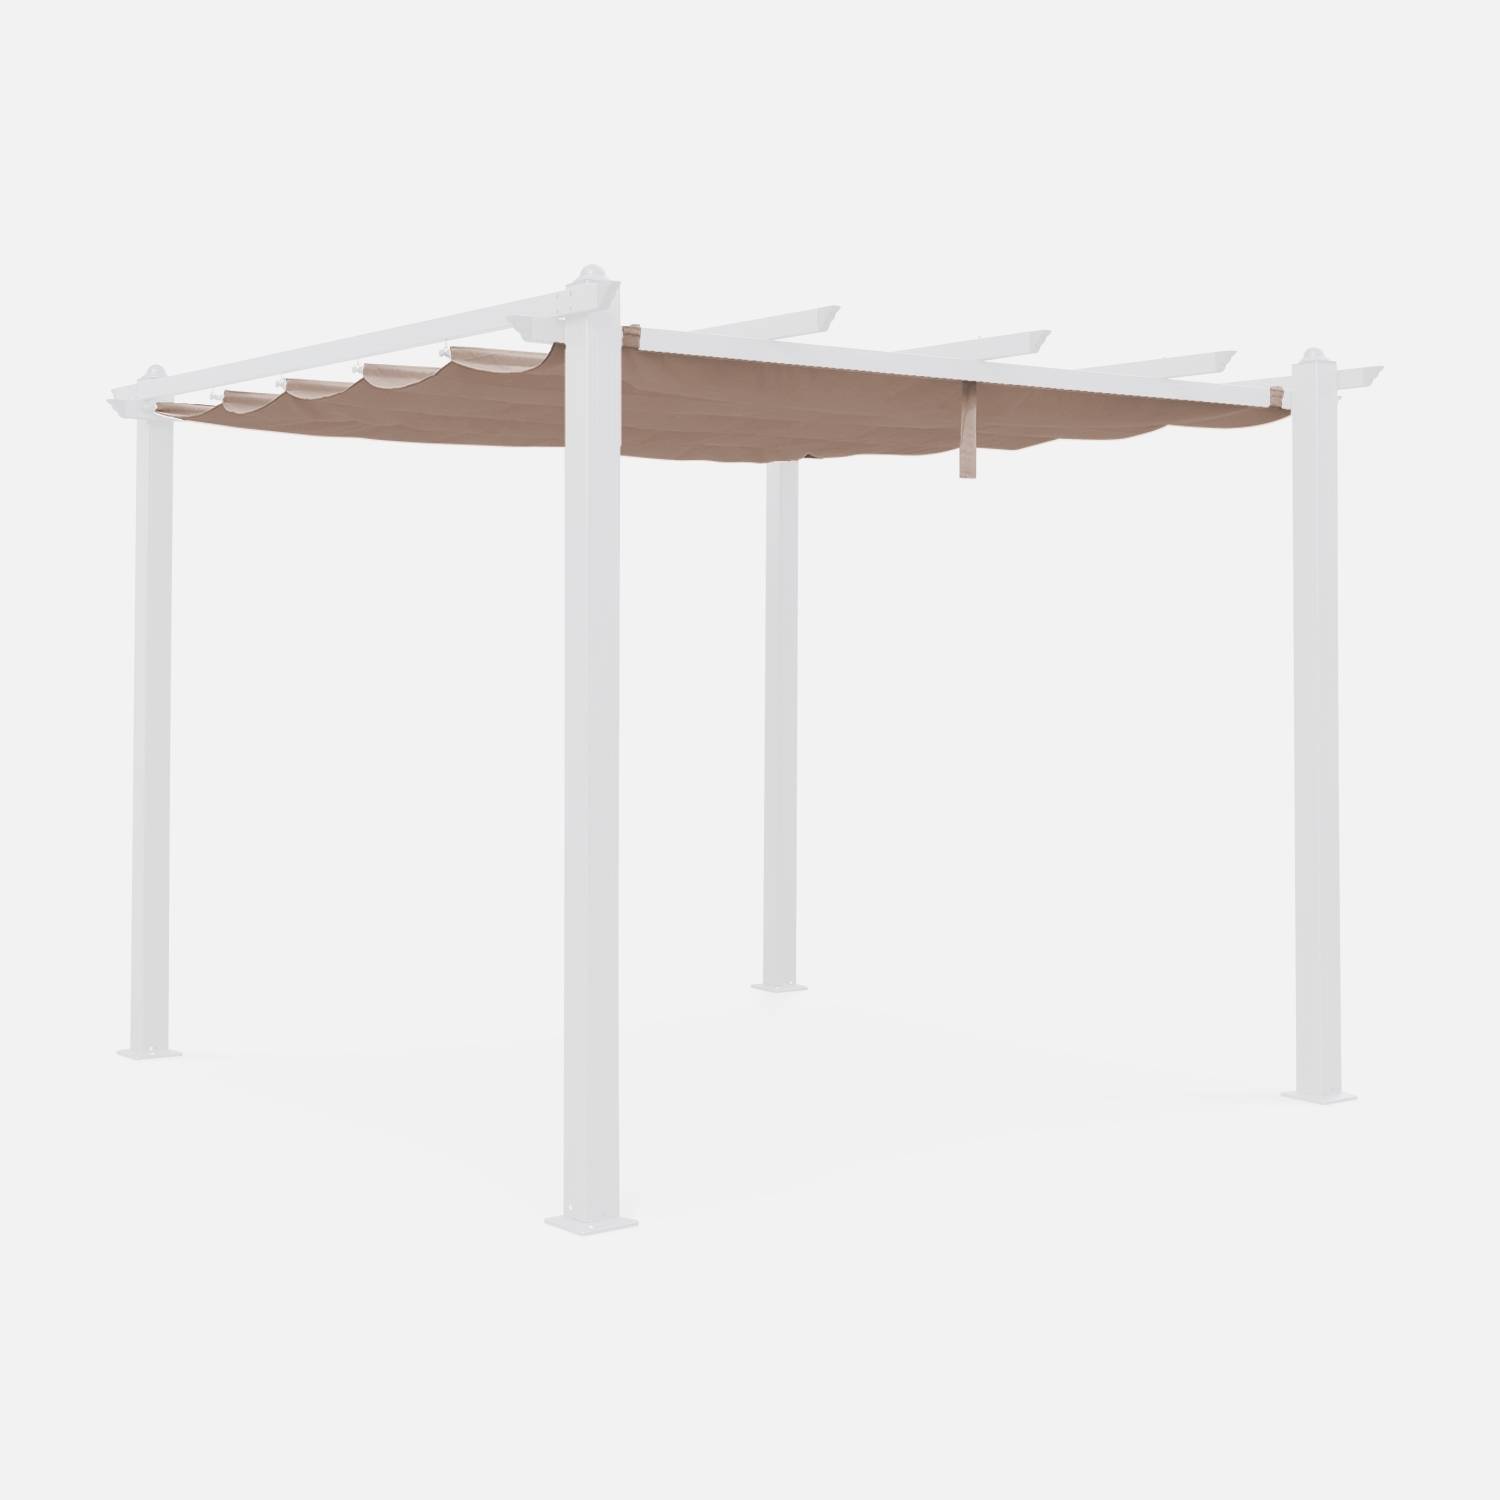 Canopy roof for 3x3m Condate gazebo, Beige-brown | sweeek